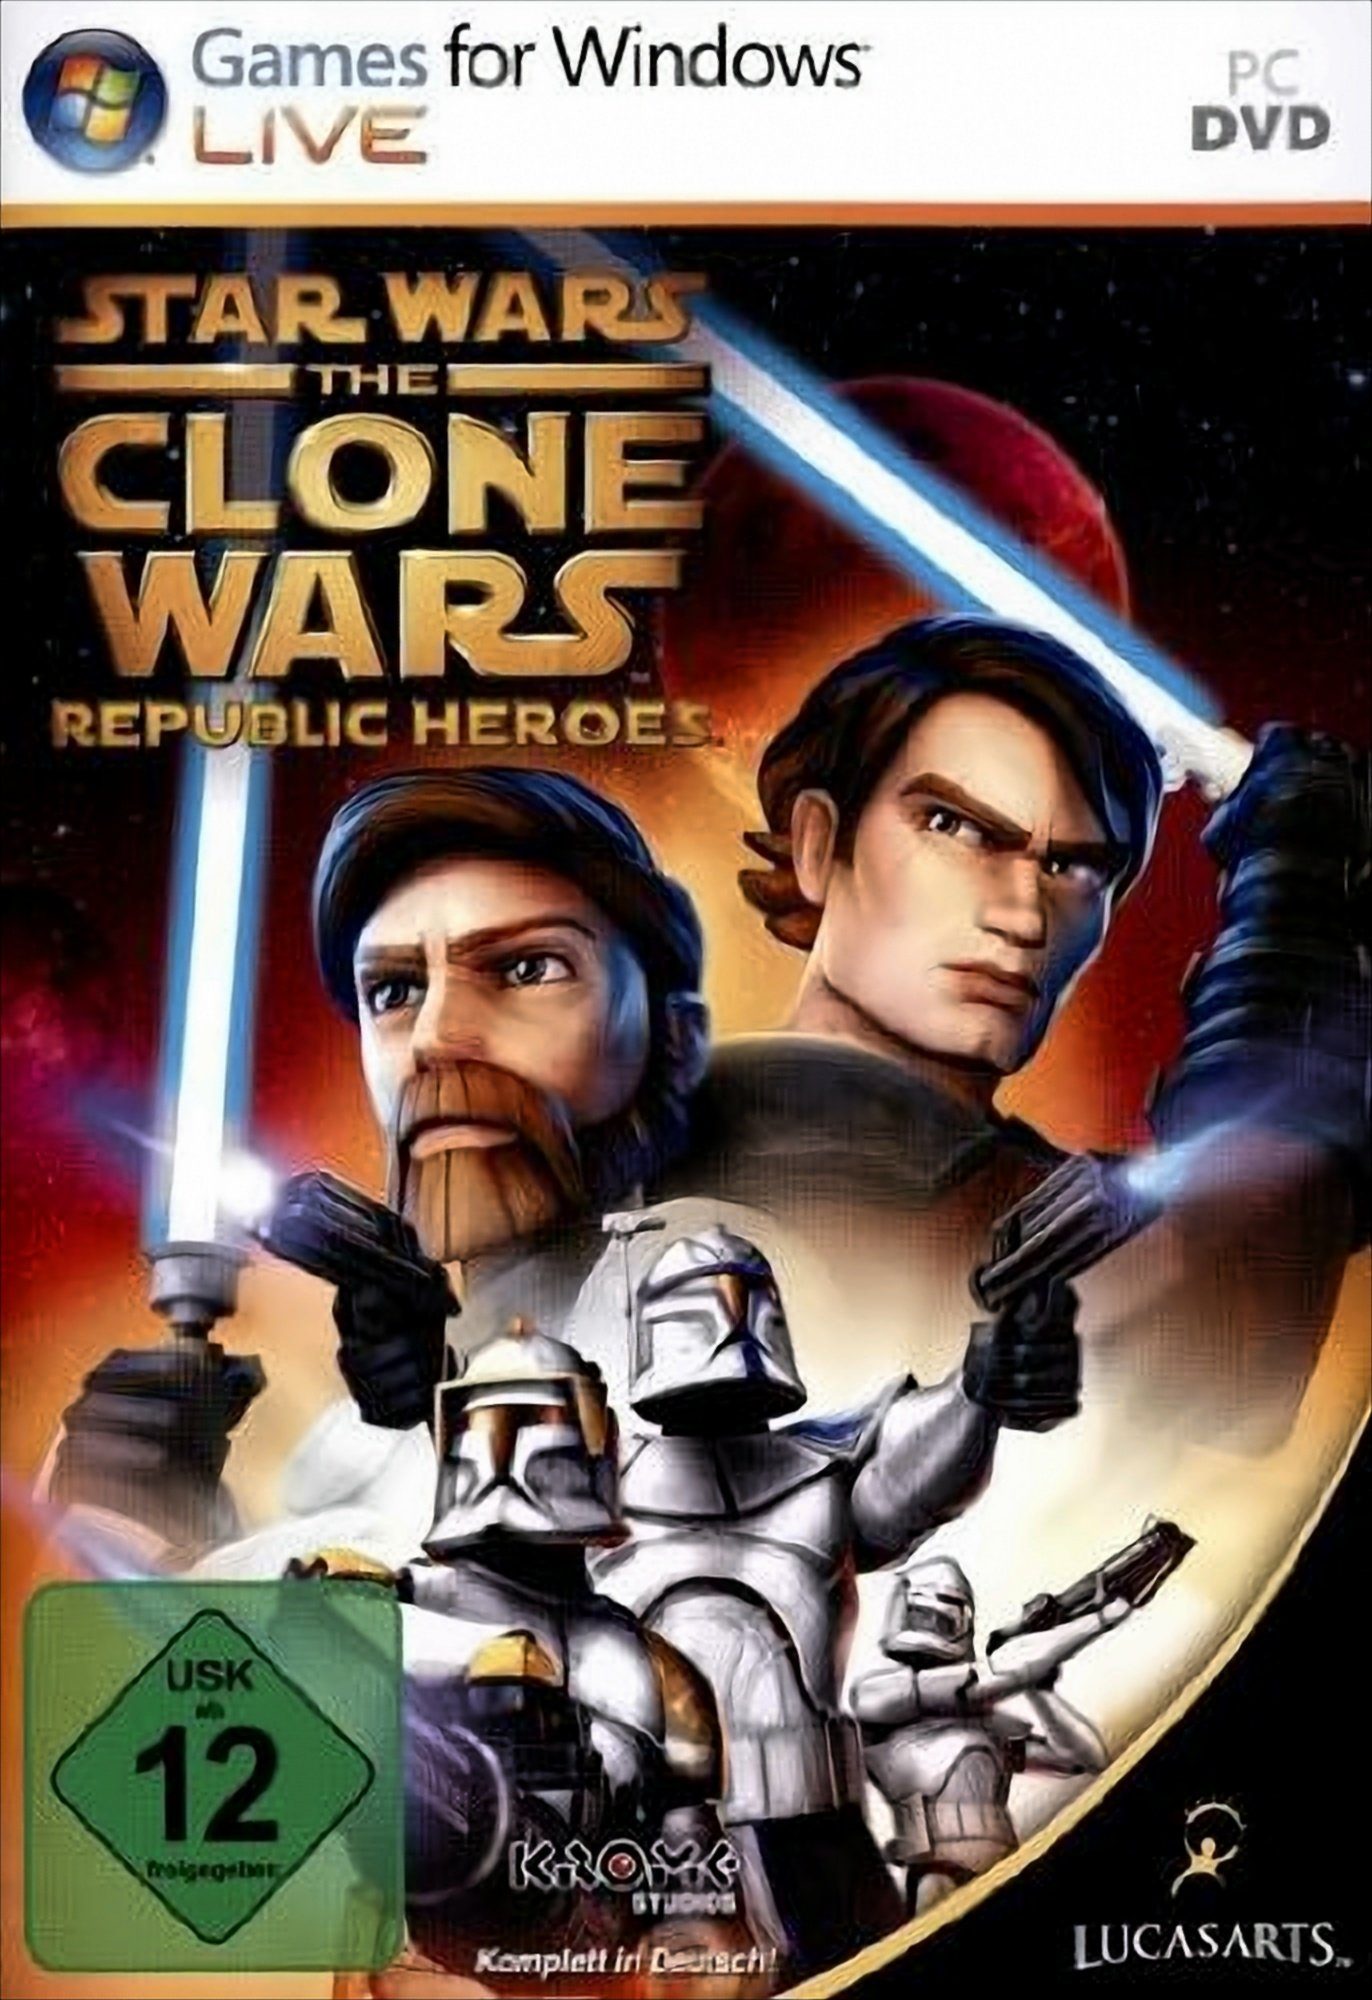 Star Wars: The Clone Wars - Republic Heroes PC